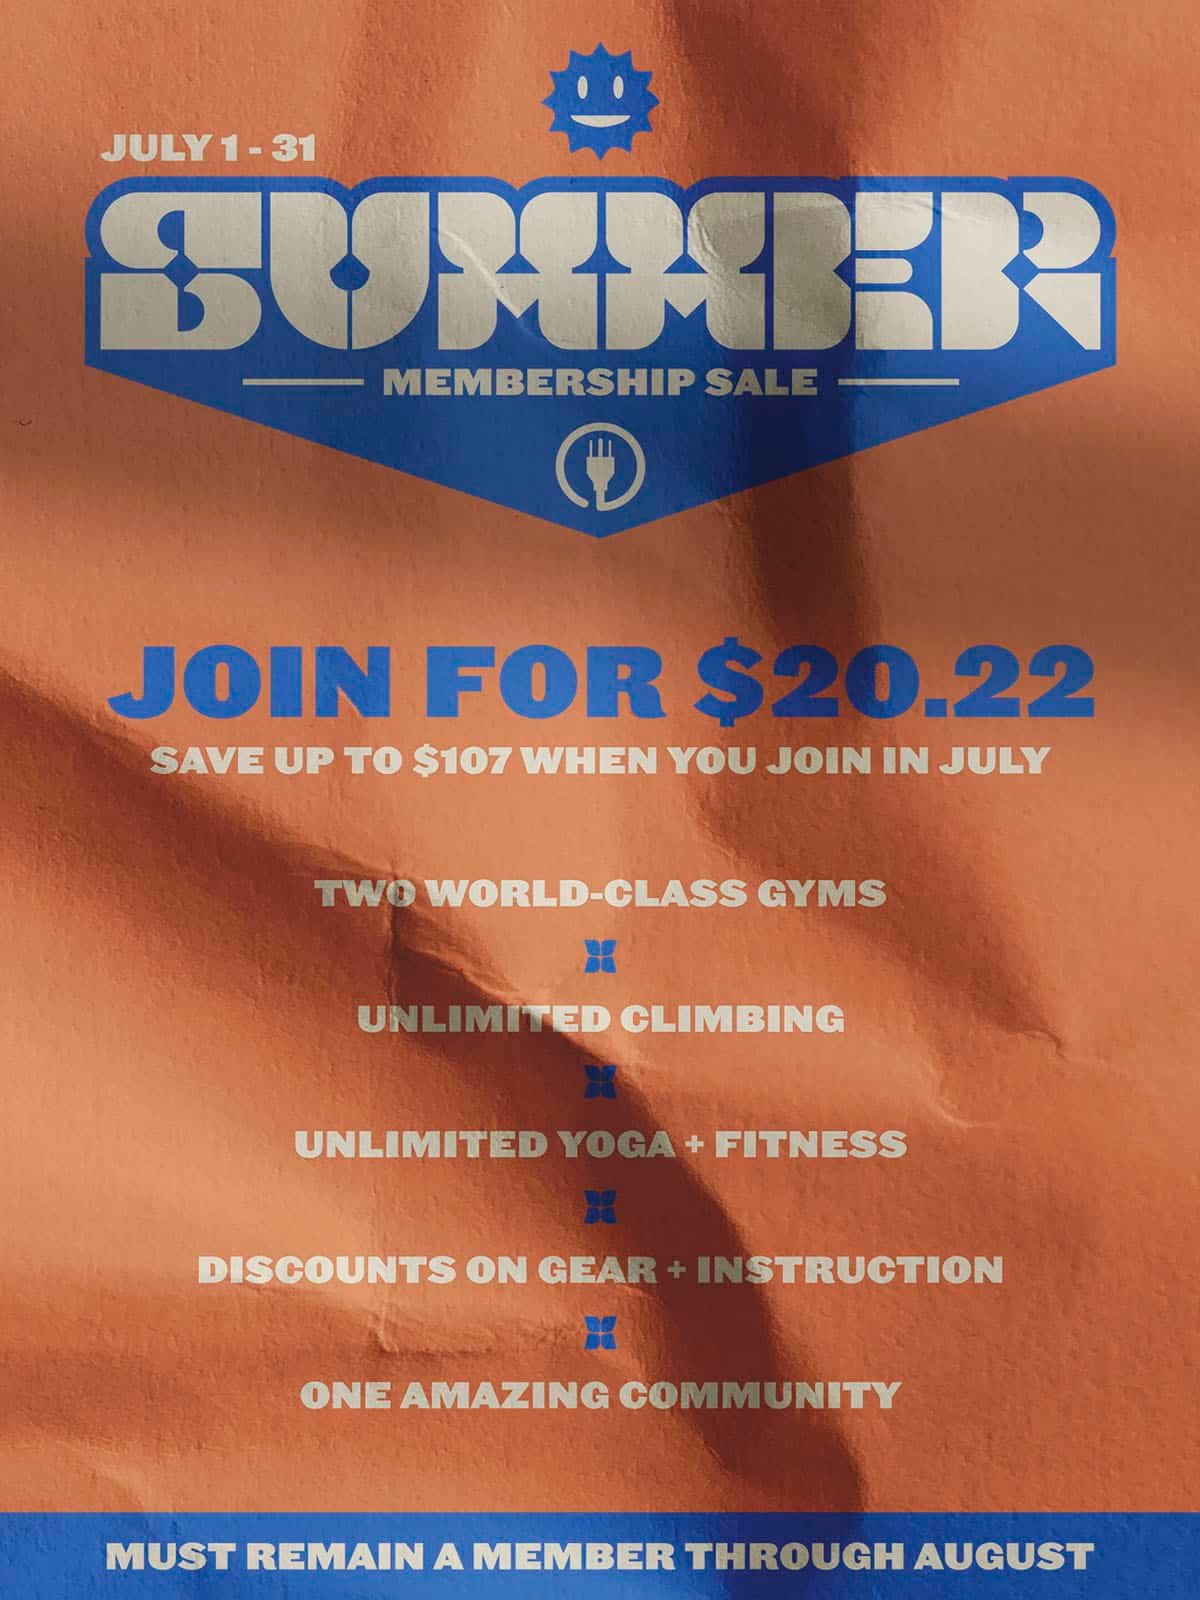 Climb So iLL summer membership sale poster.